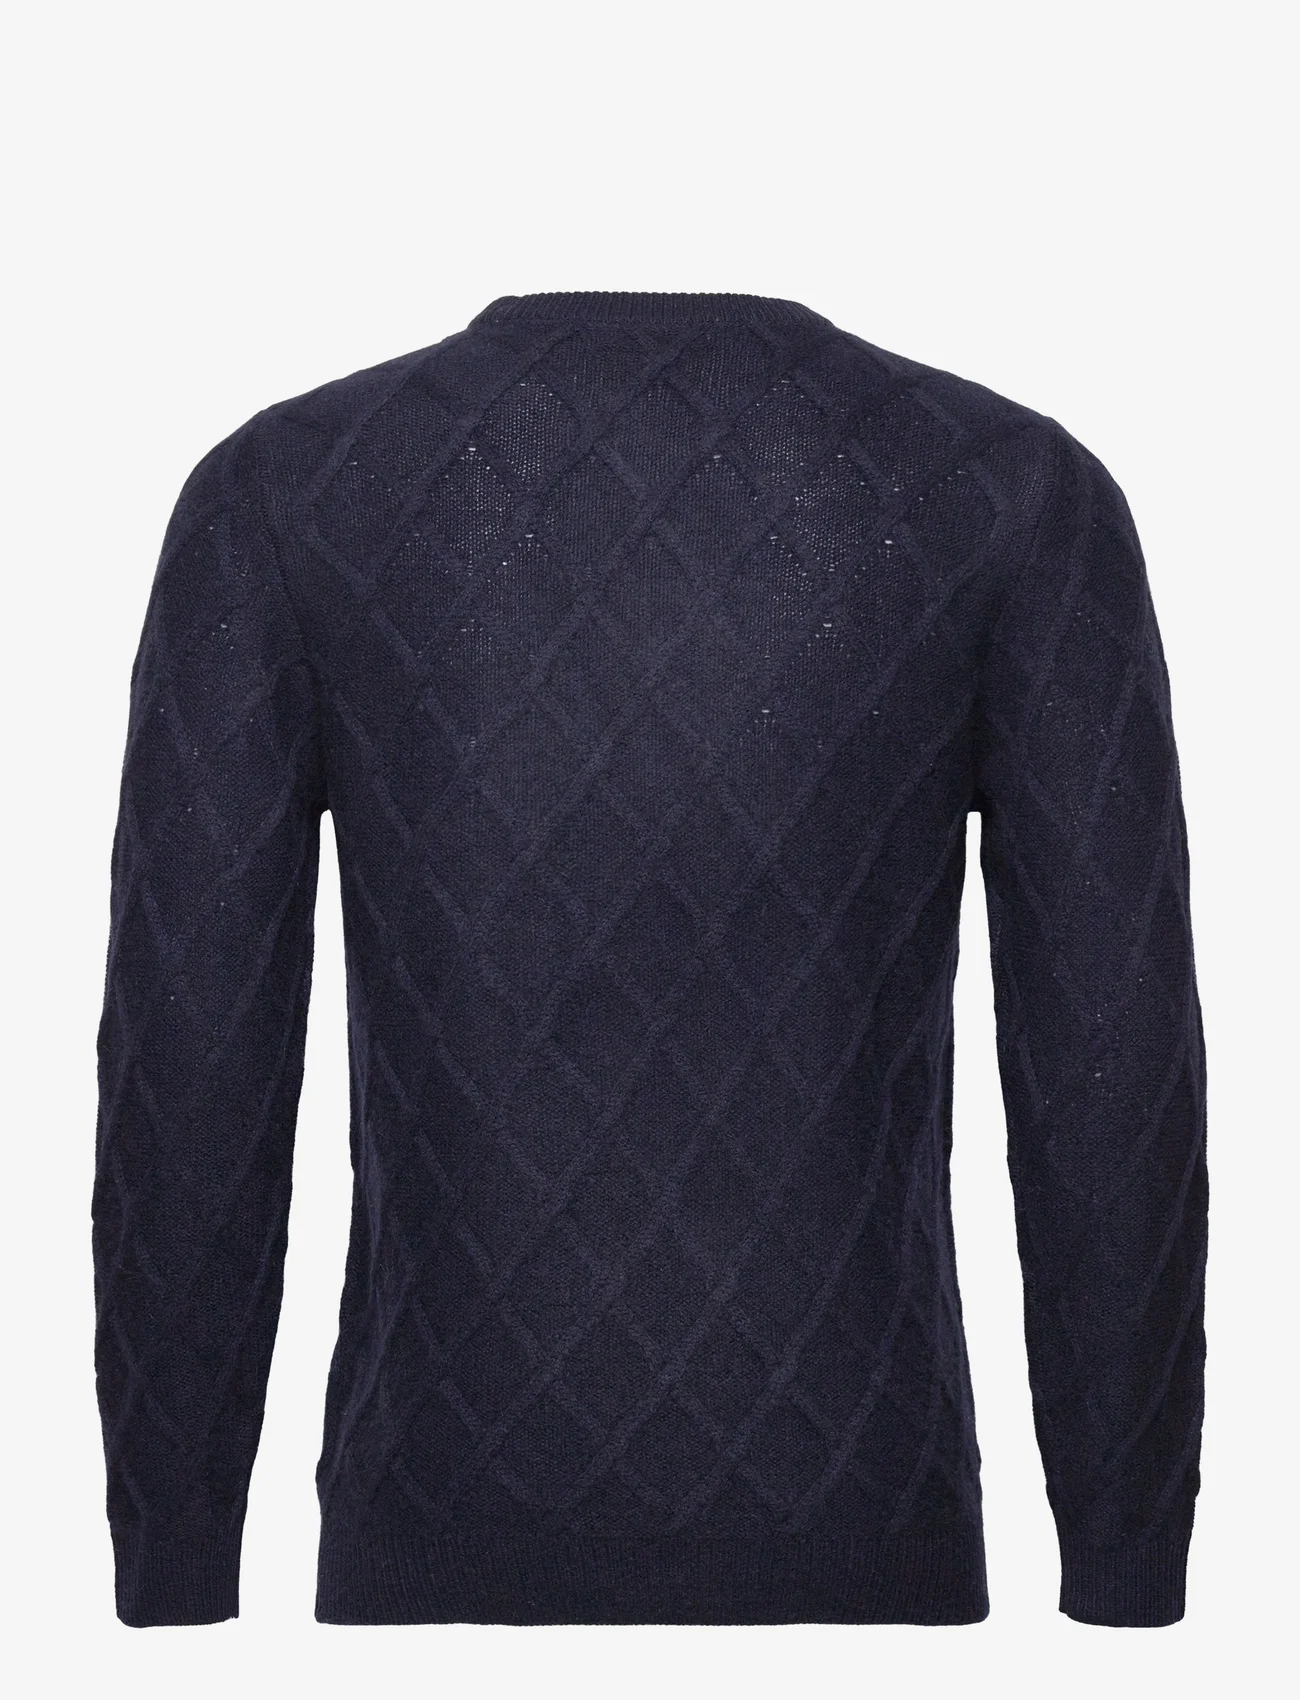 Davida Cashmere - Man O-neck Cable Sweater - knitted round necks - navy - 1